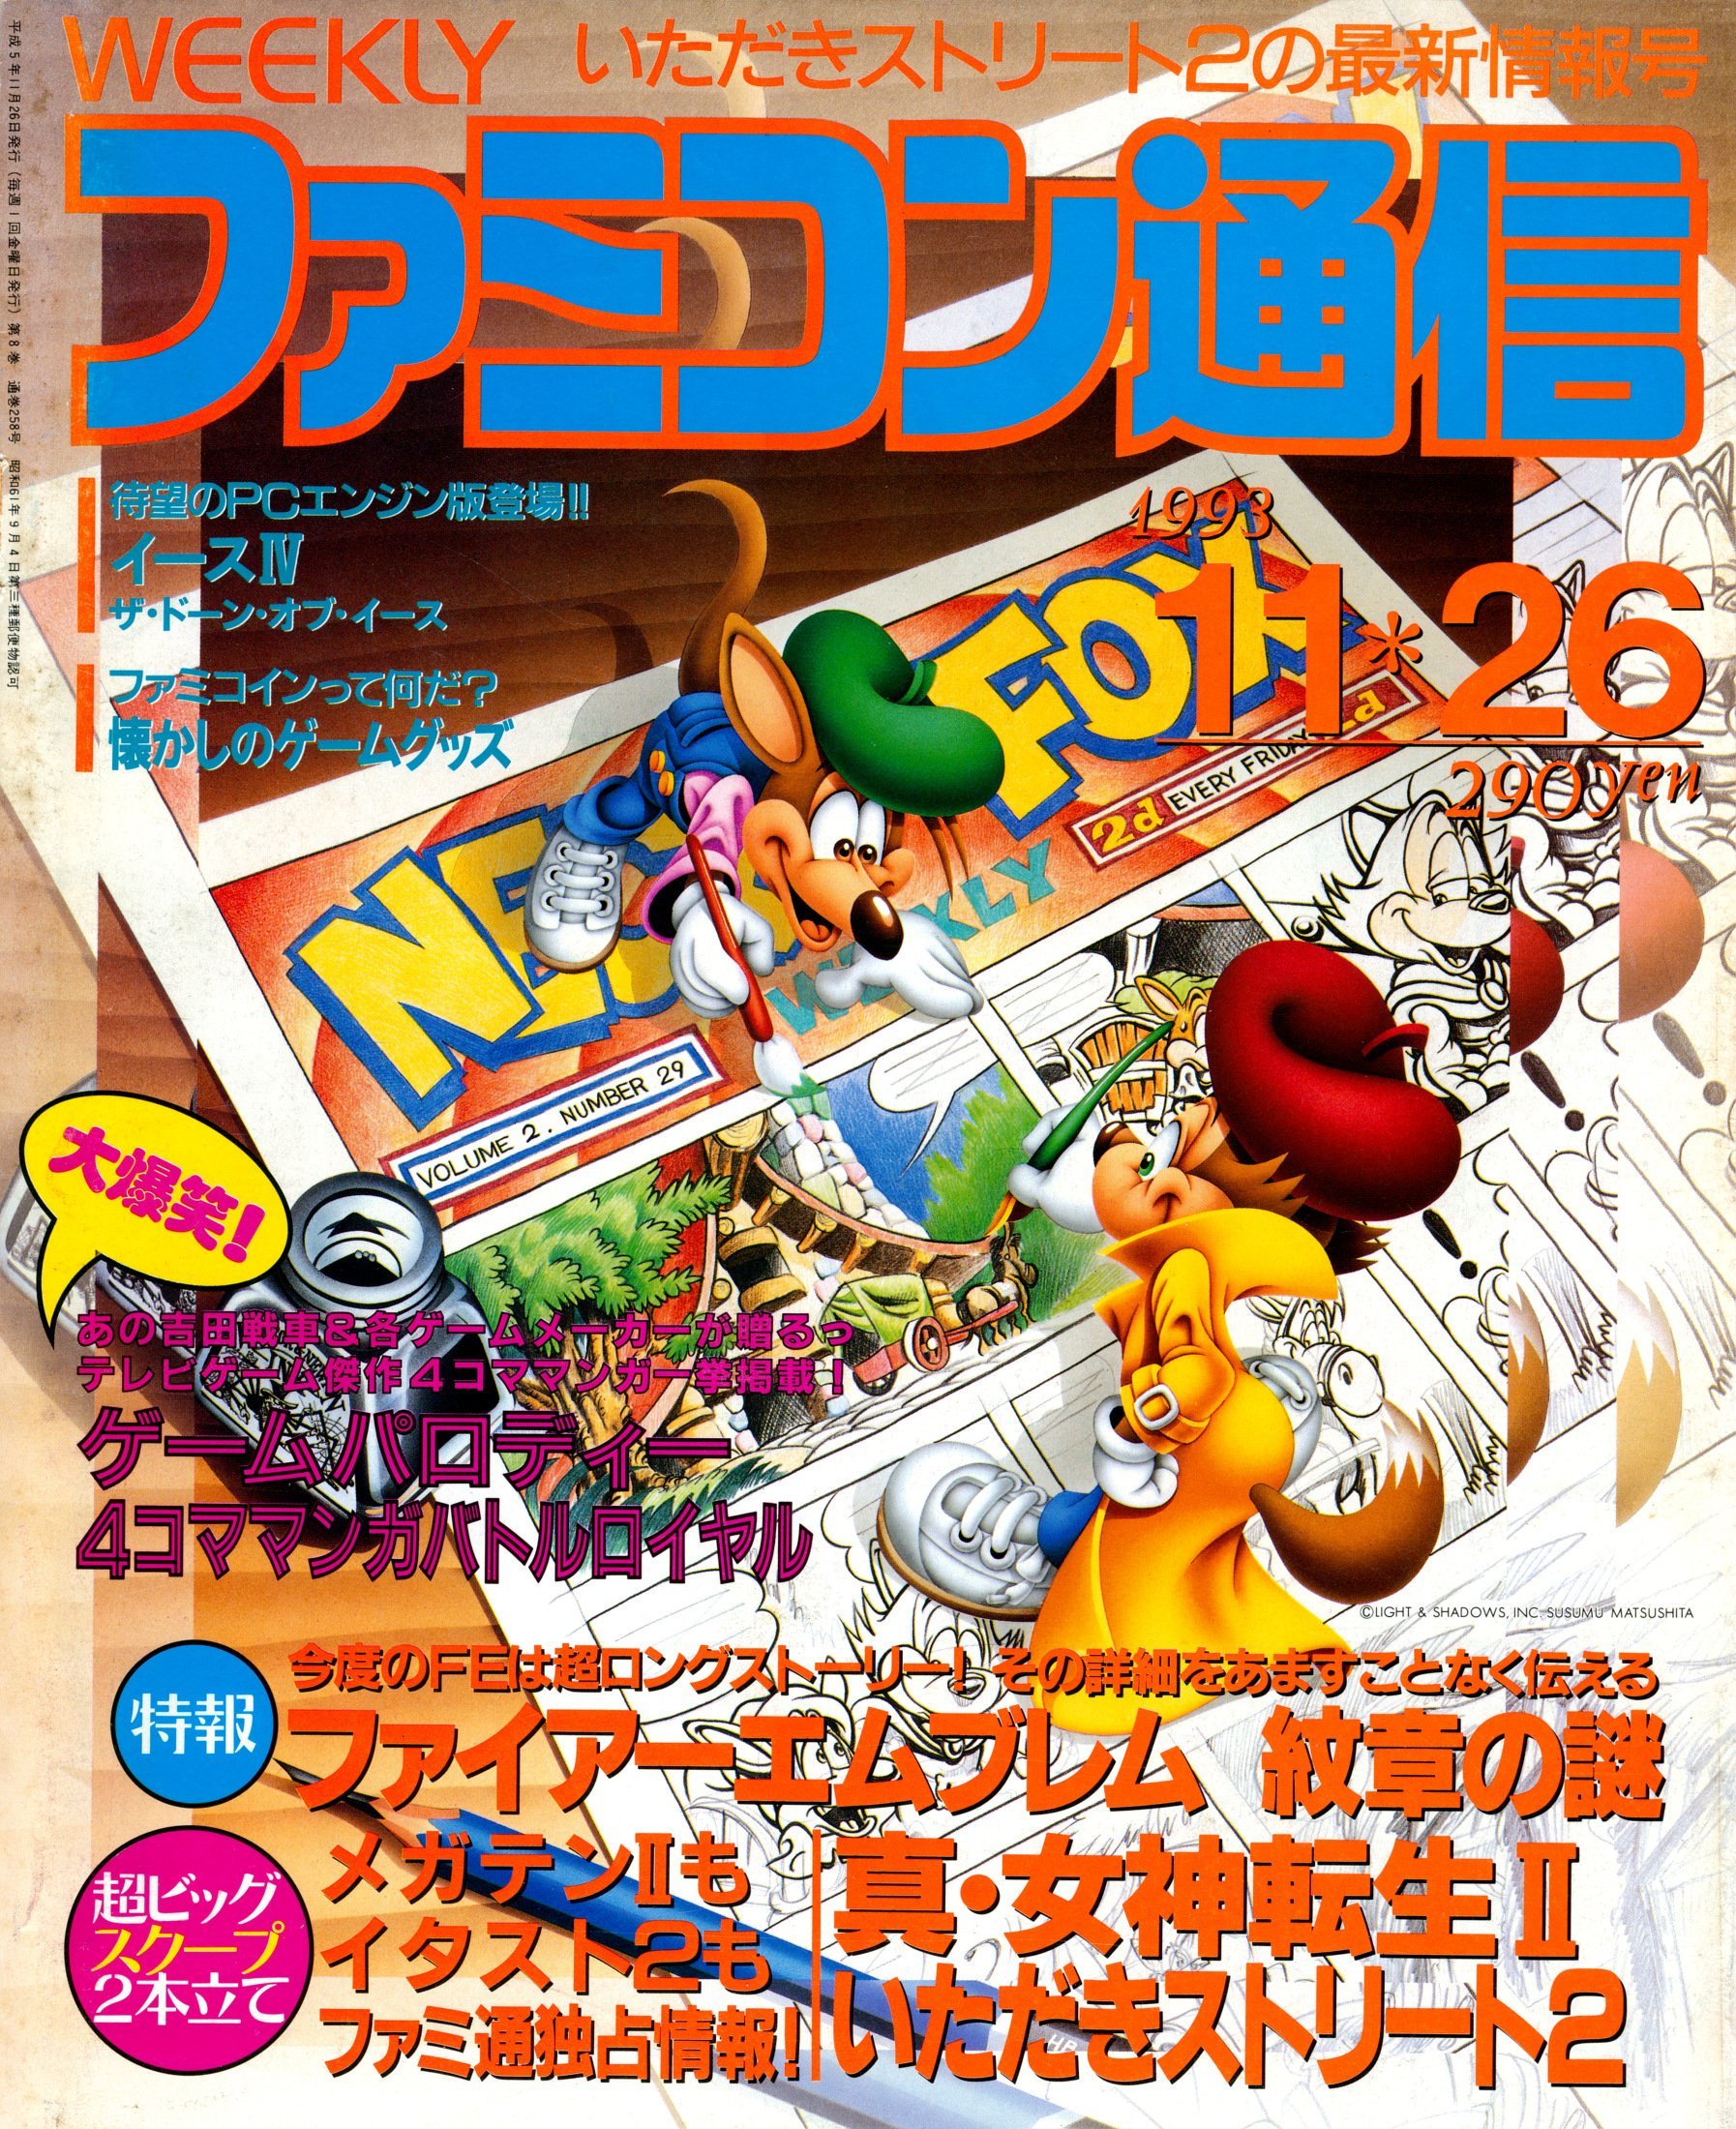 Famitsu 0258 (November 26, 1993)